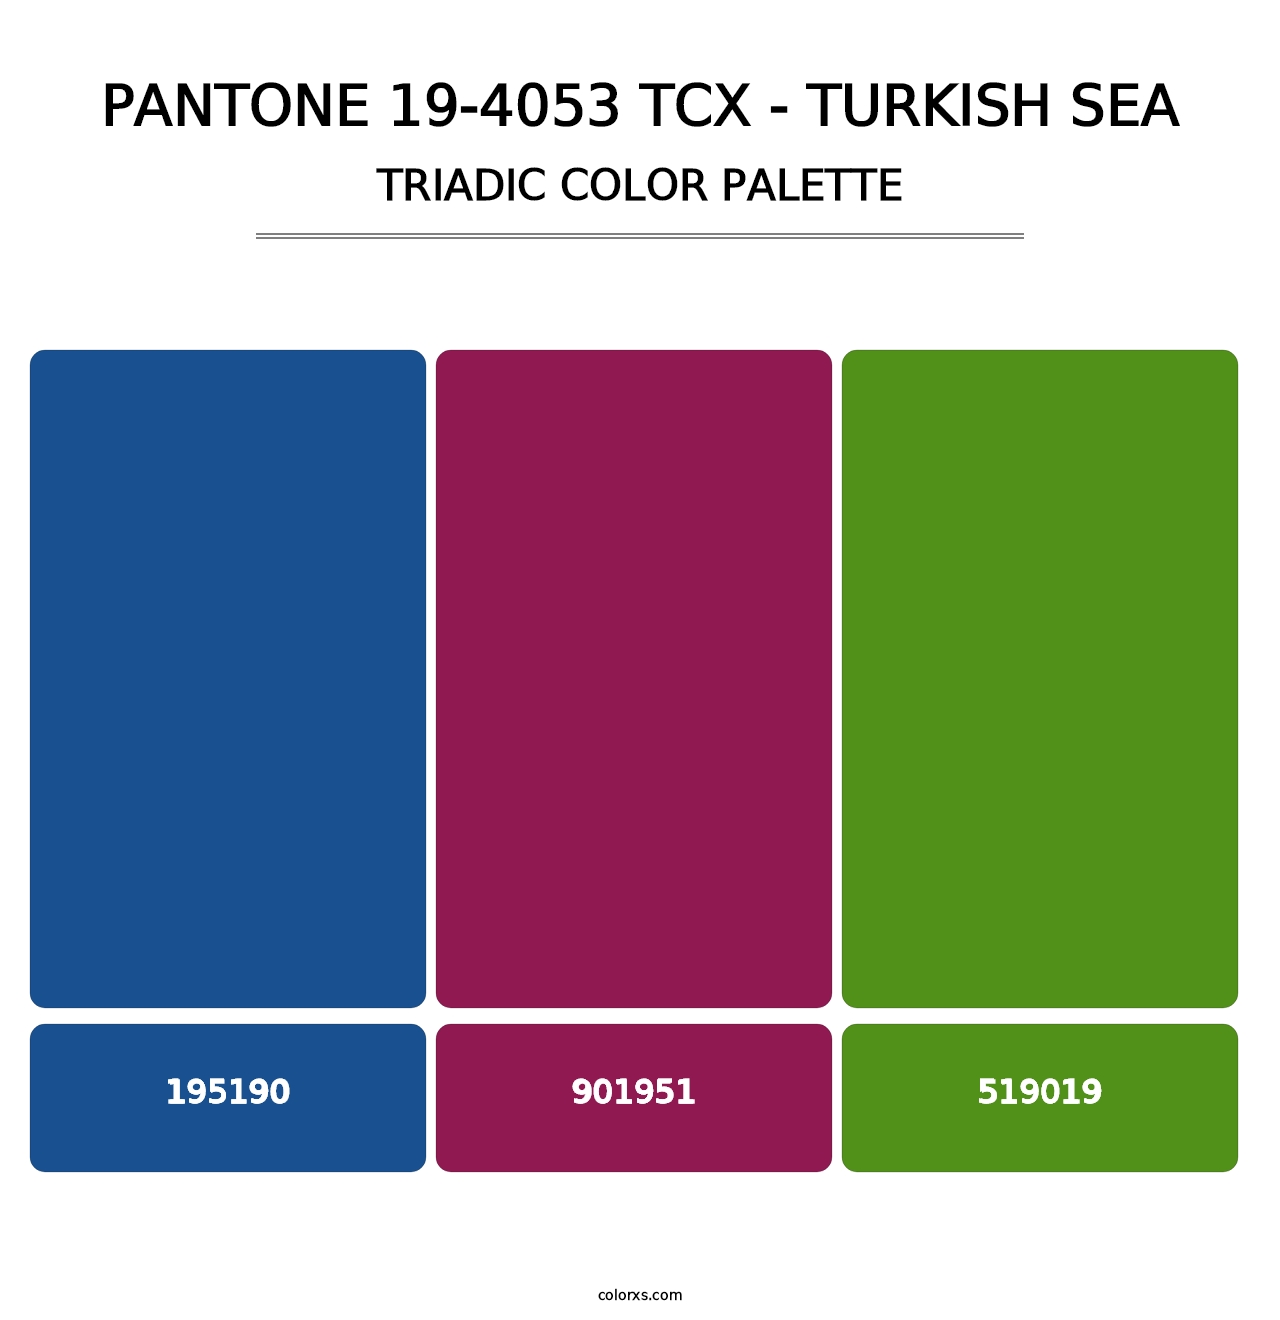 PANTONE 19-4053 TCX - Turkish Sea - Triadic Color Palette